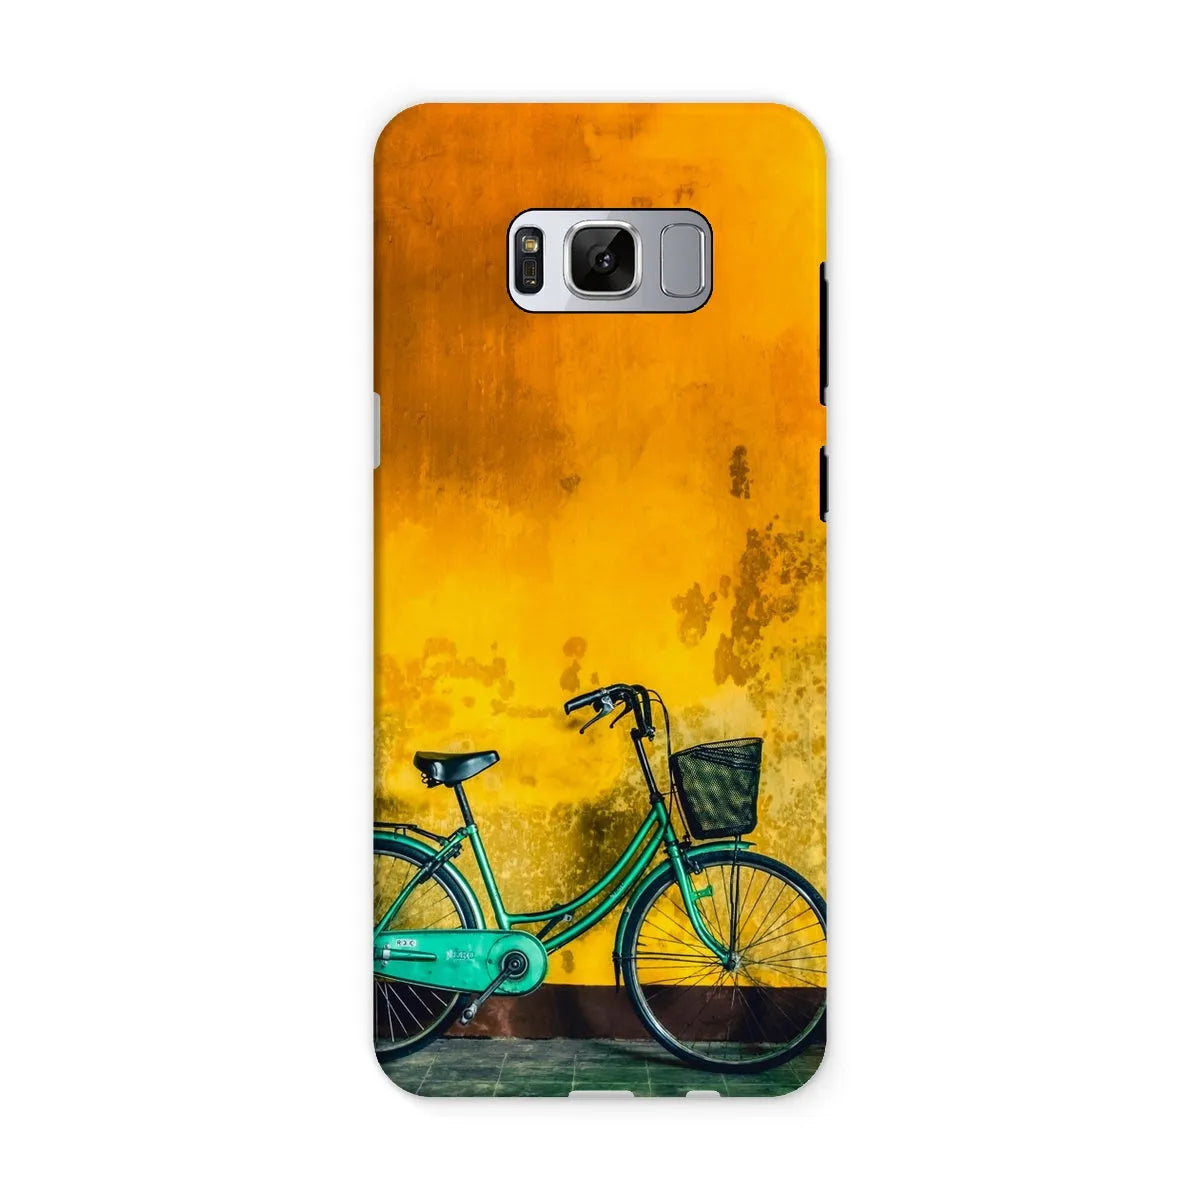 Lemon Lime - Hoi An Vietnam Bicycle Art Phone Case - Samsung Galaxy S8 / Matte - Mobile Phone Cases - Aesthetic Art